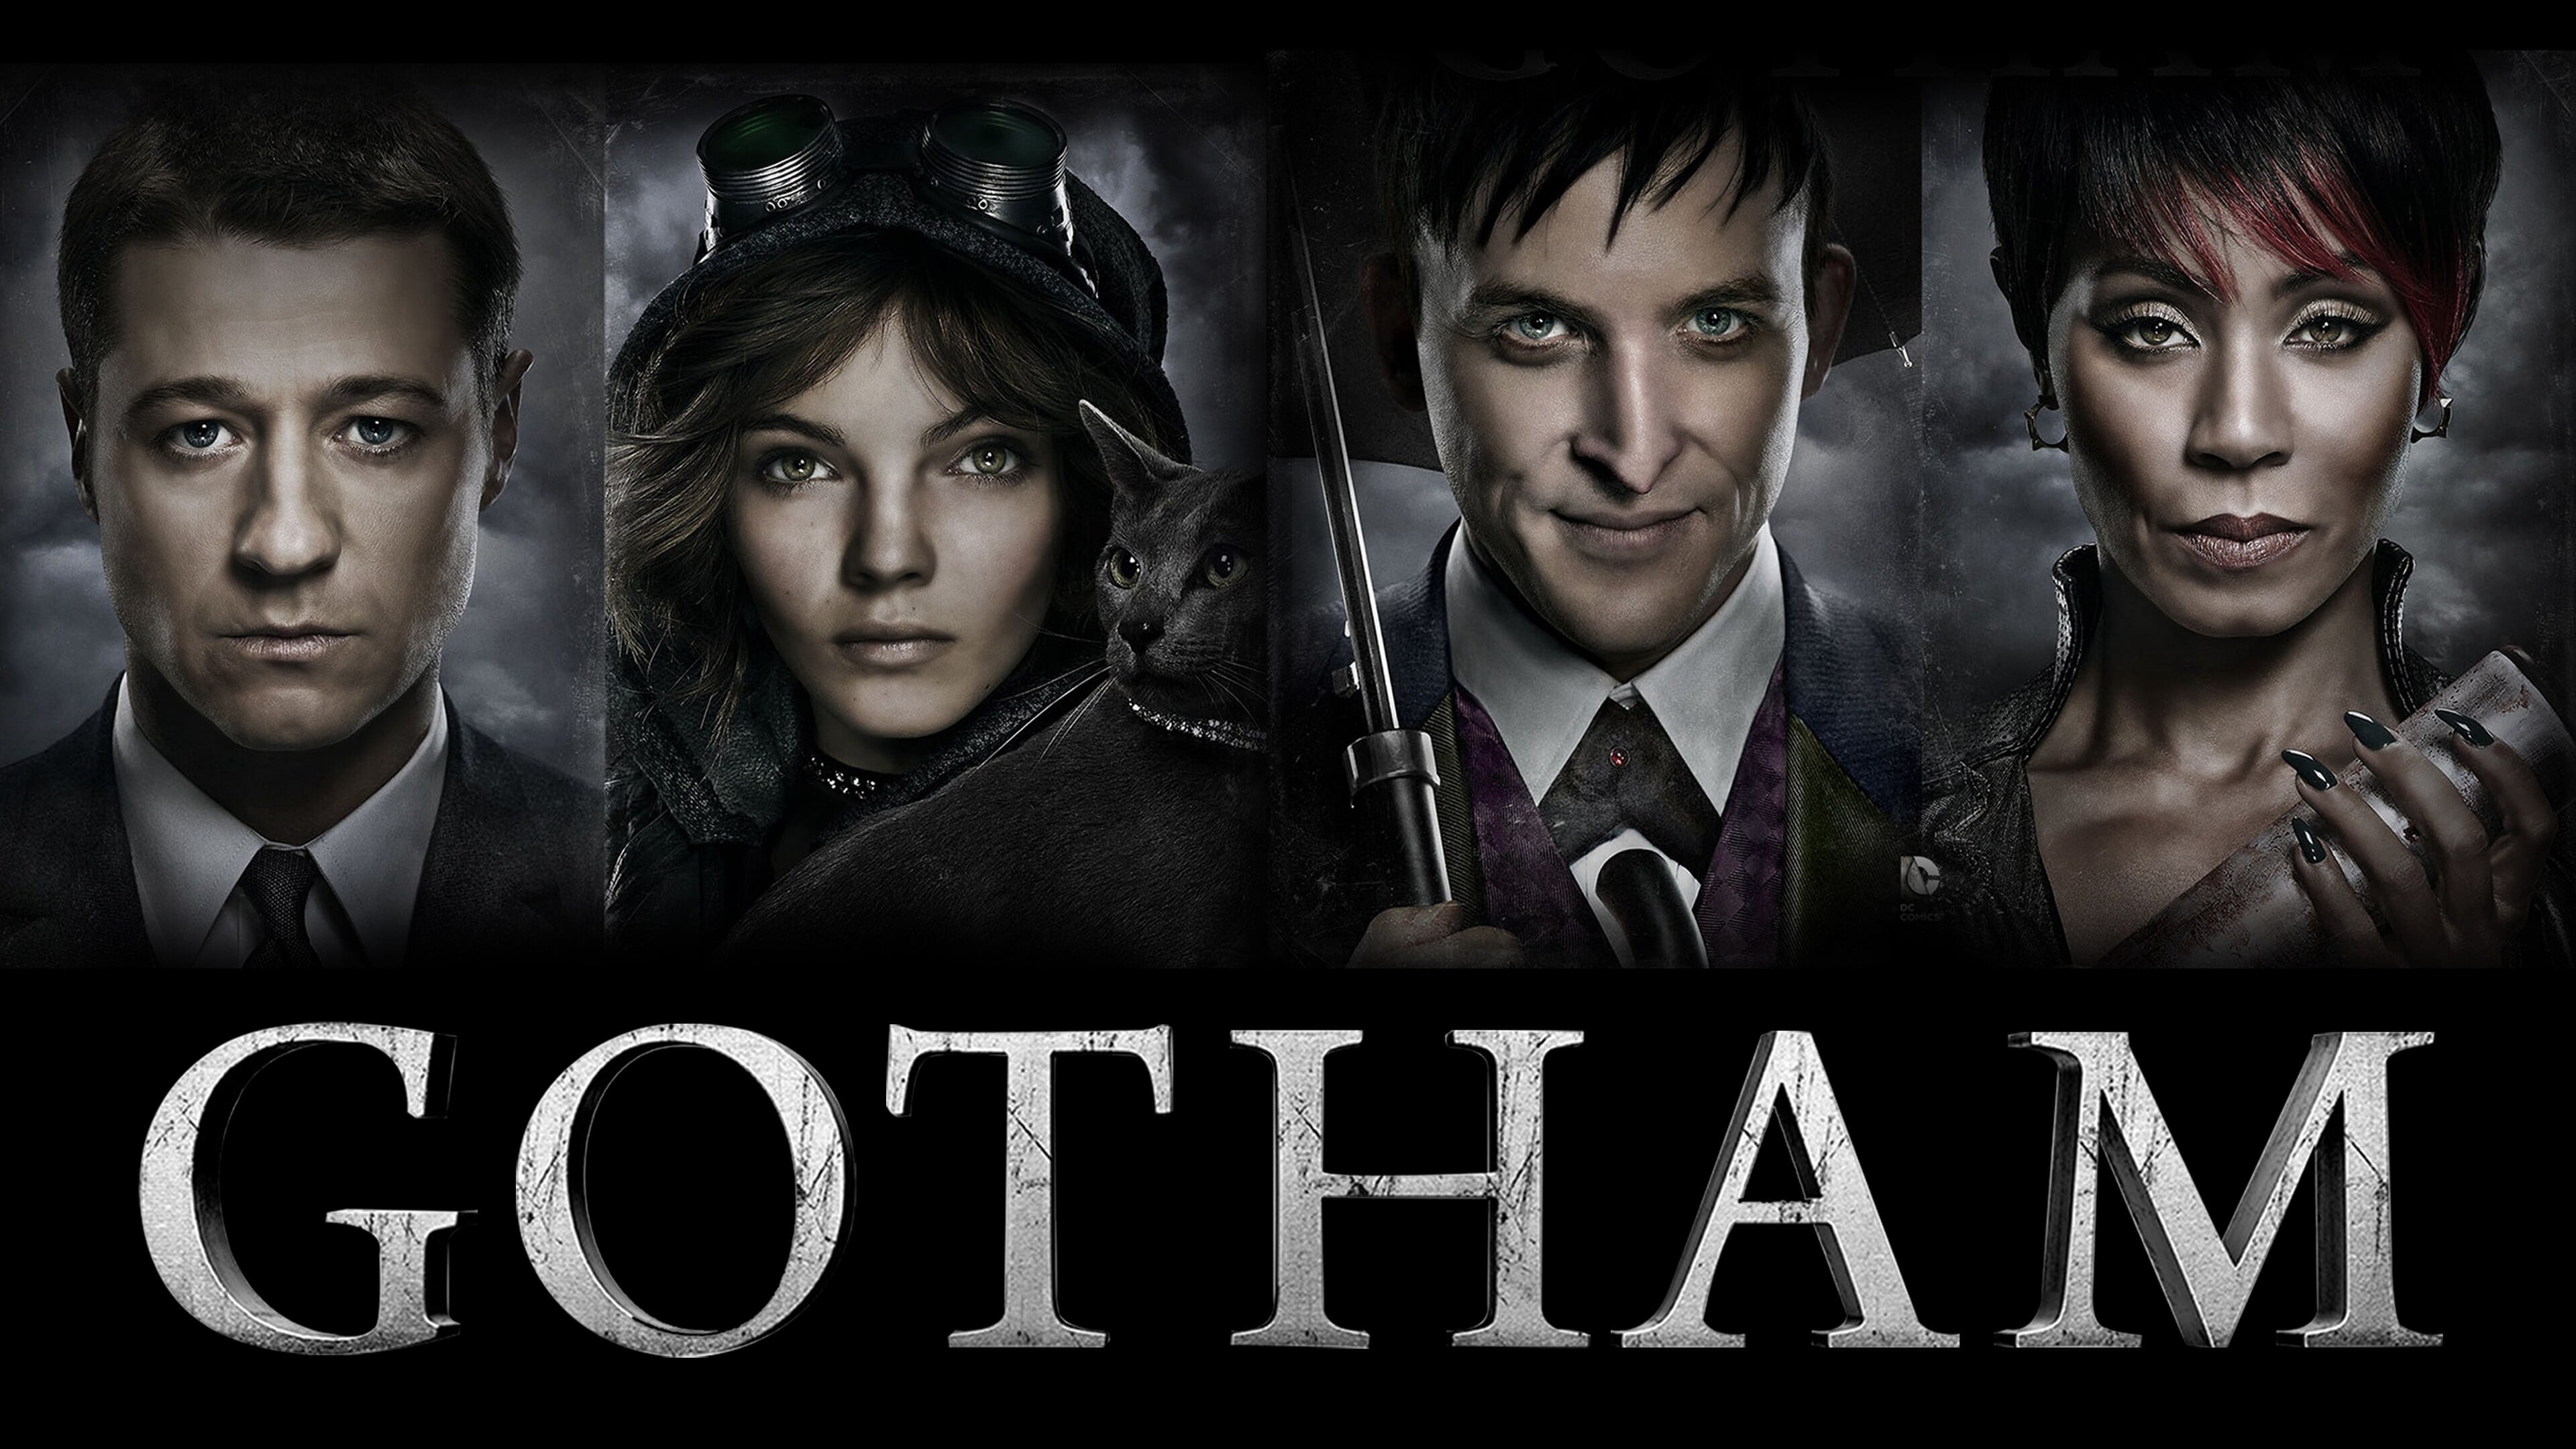 Gotham - Season 1